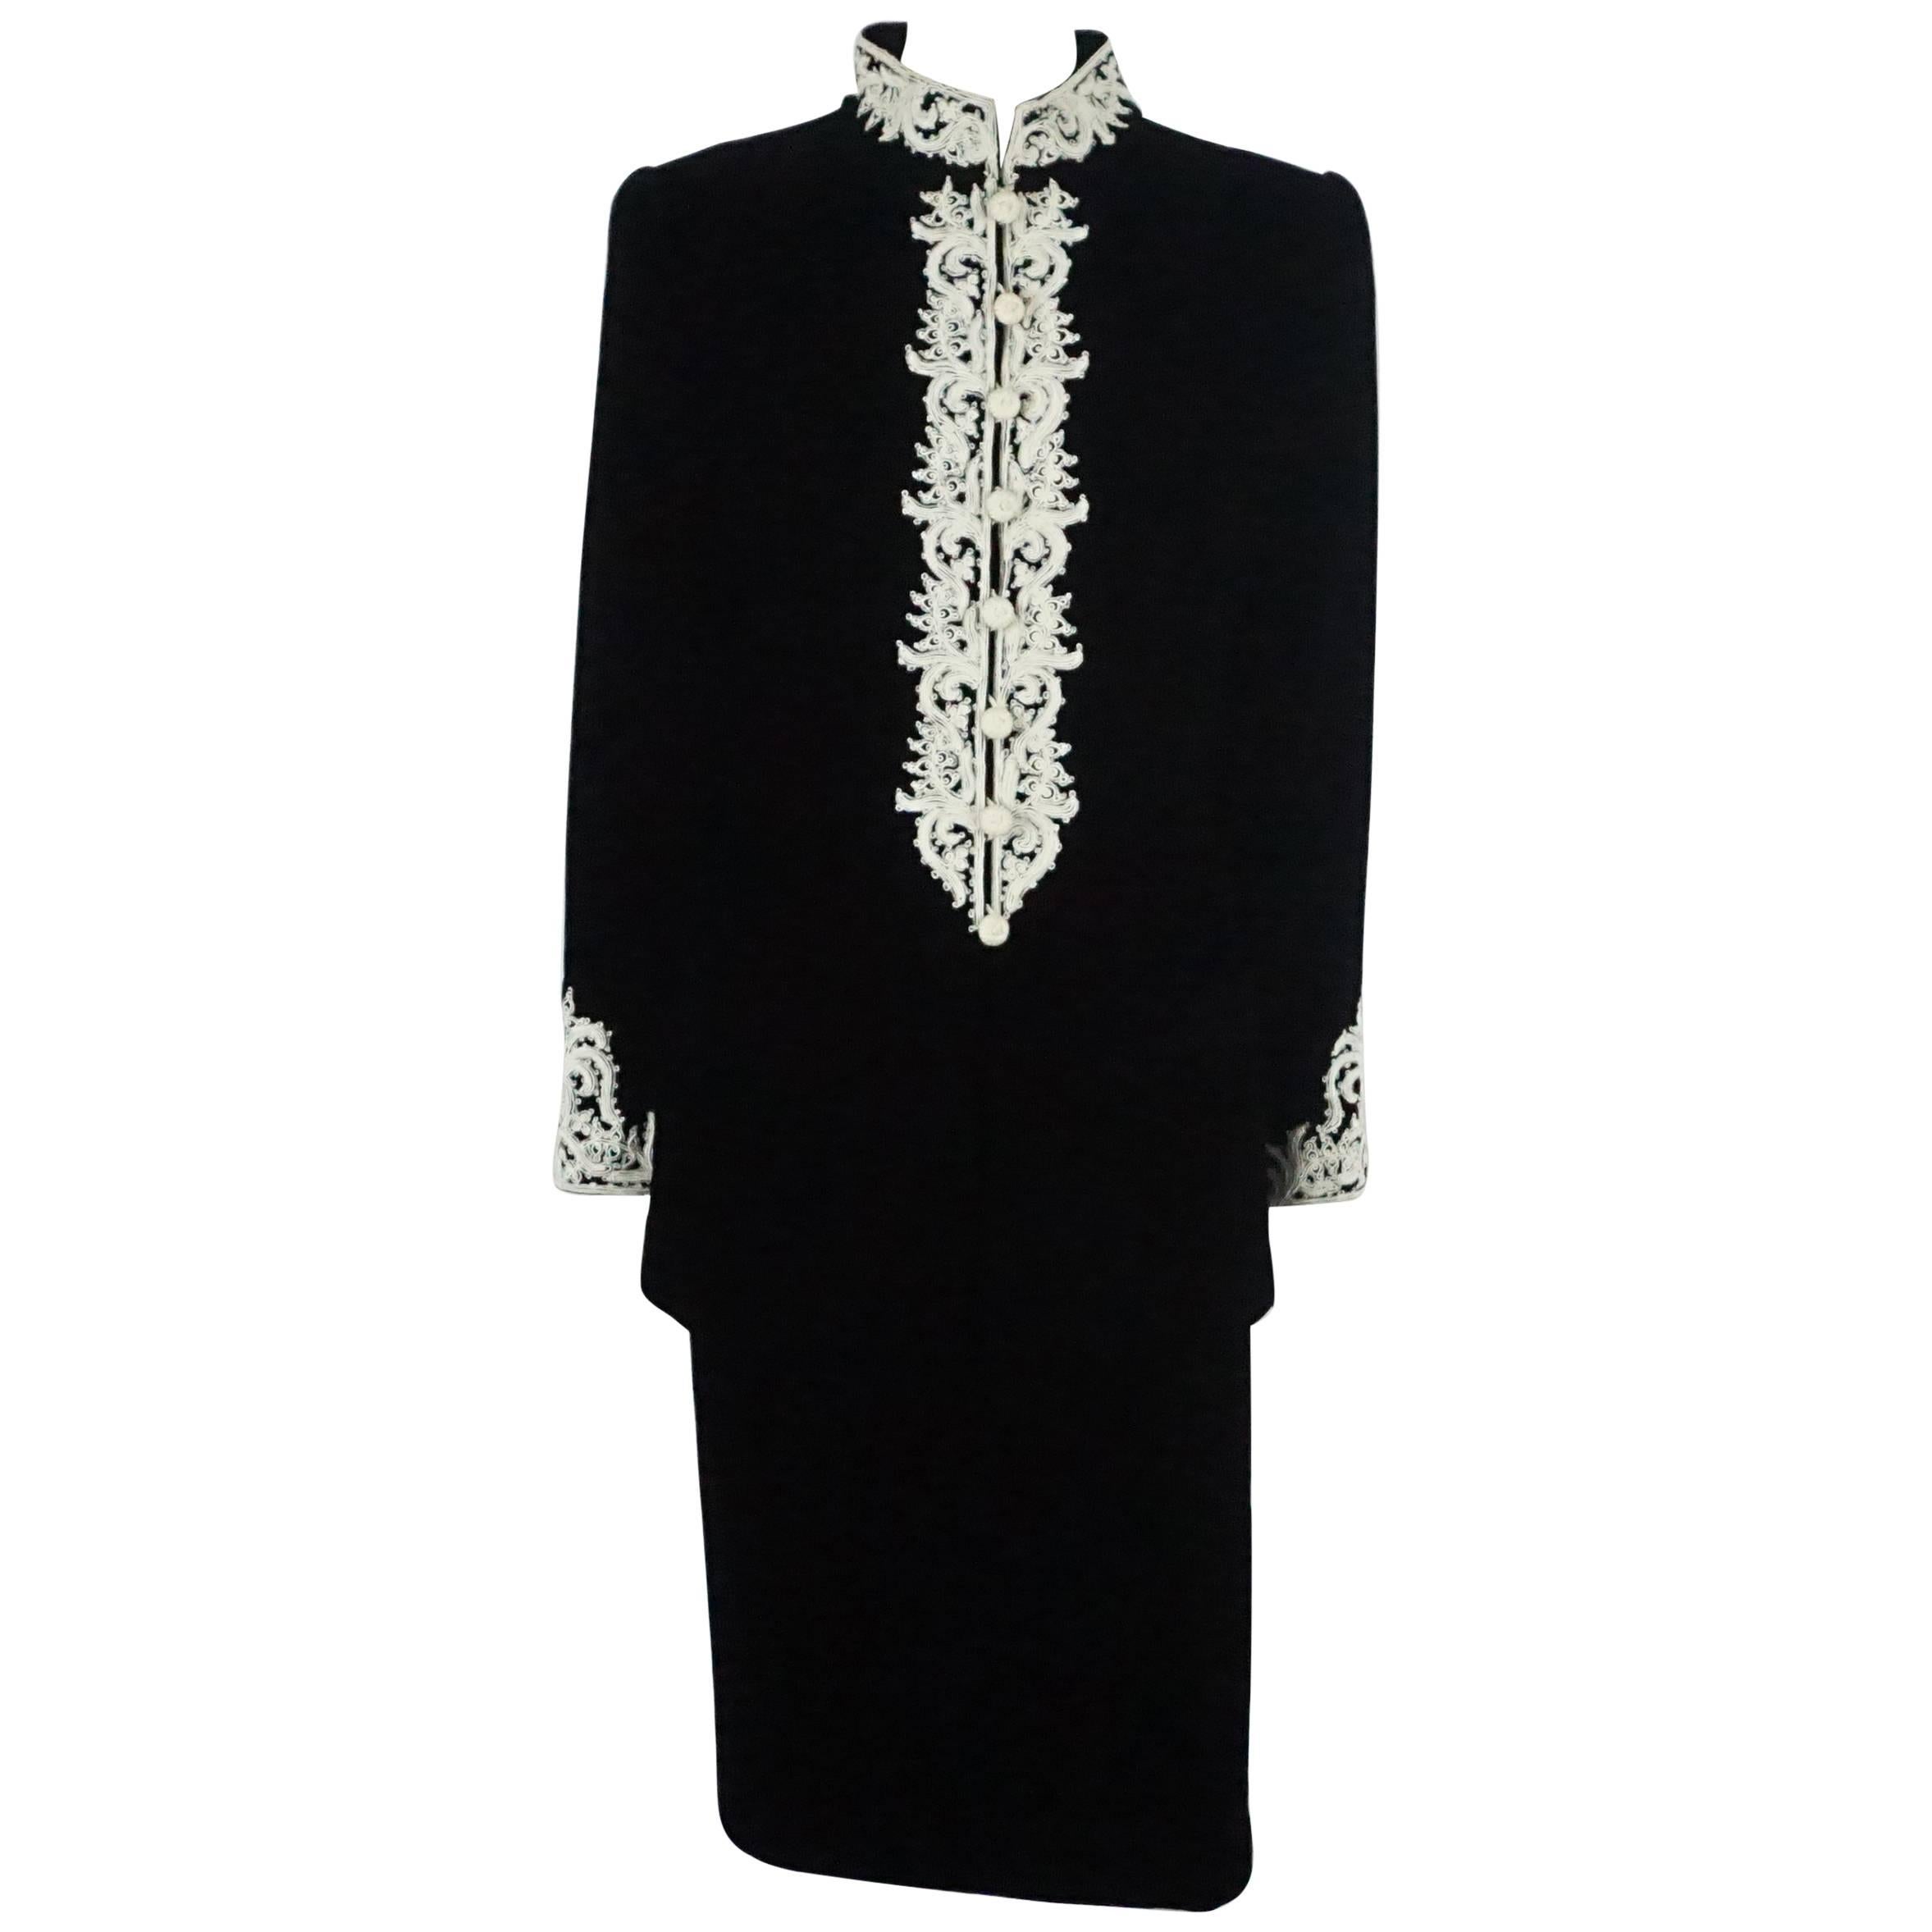 Oscar de la Renta Black Velvet Skirt Suit with White Embroidery - 10 - 1990s For Sale